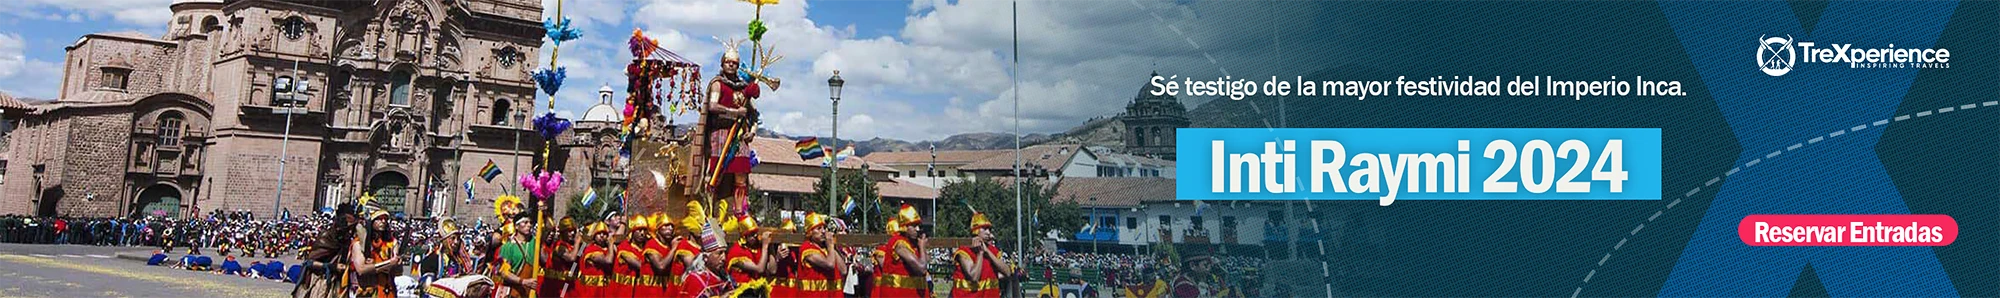 Book Inti Raymi 2024 | TreXperience